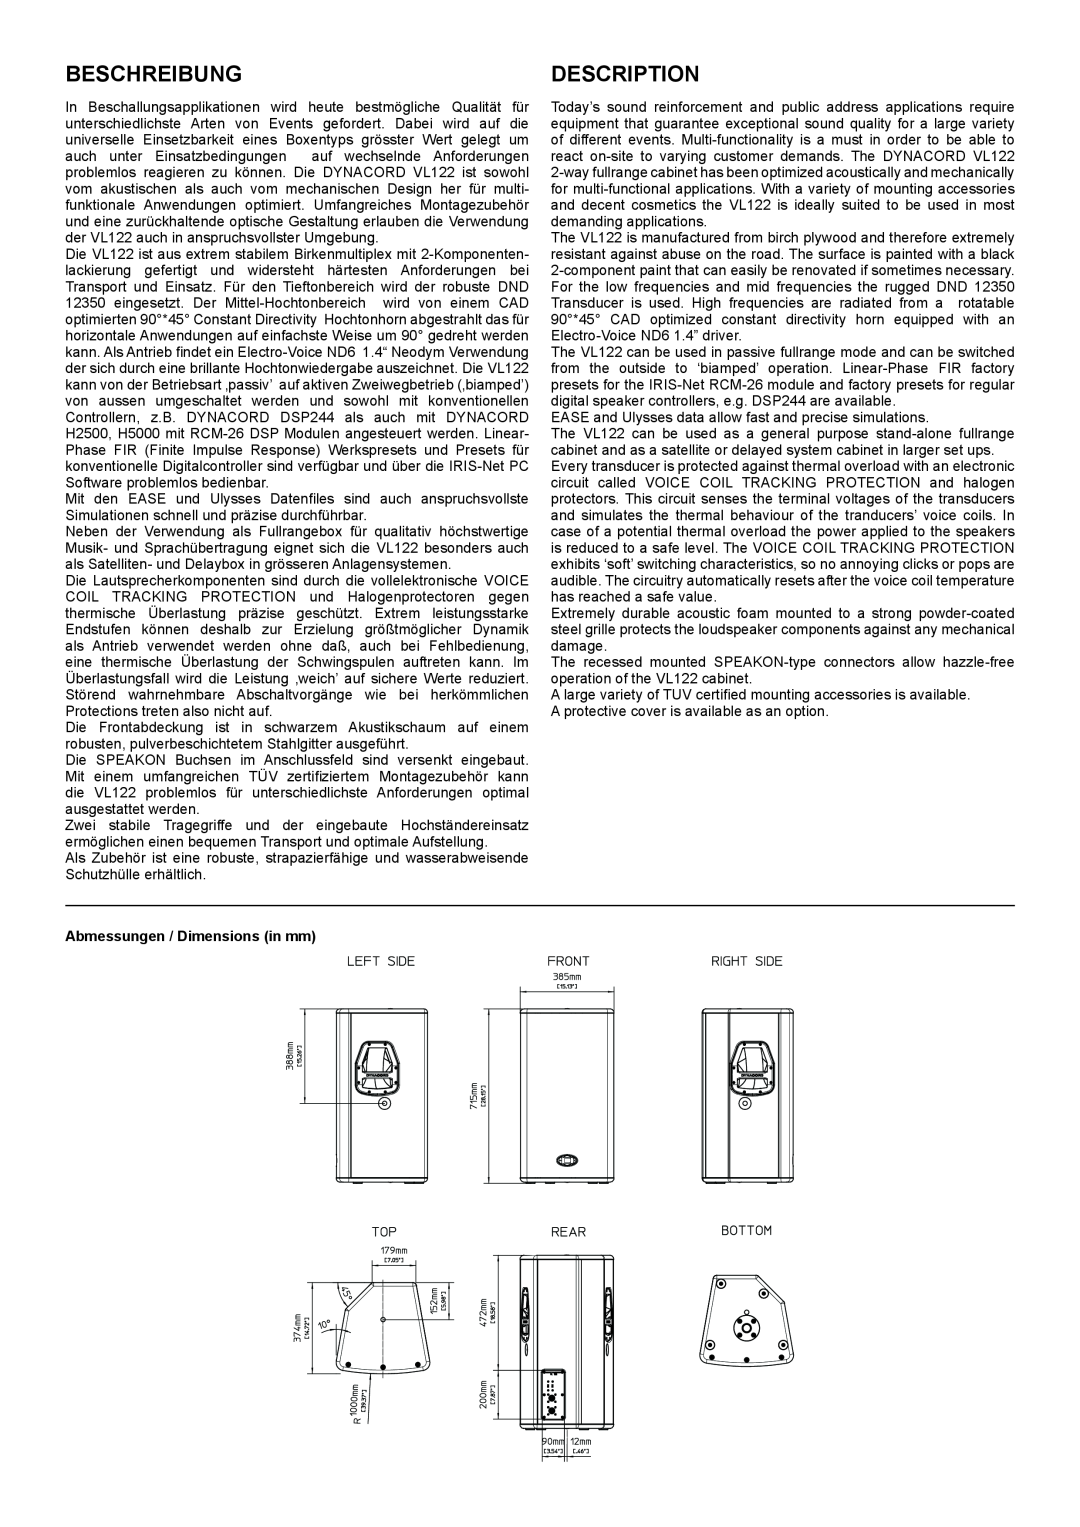 Dynacord VL 122 specifications Beschreibung, Description, Abmessungen / Dimensions in mm 